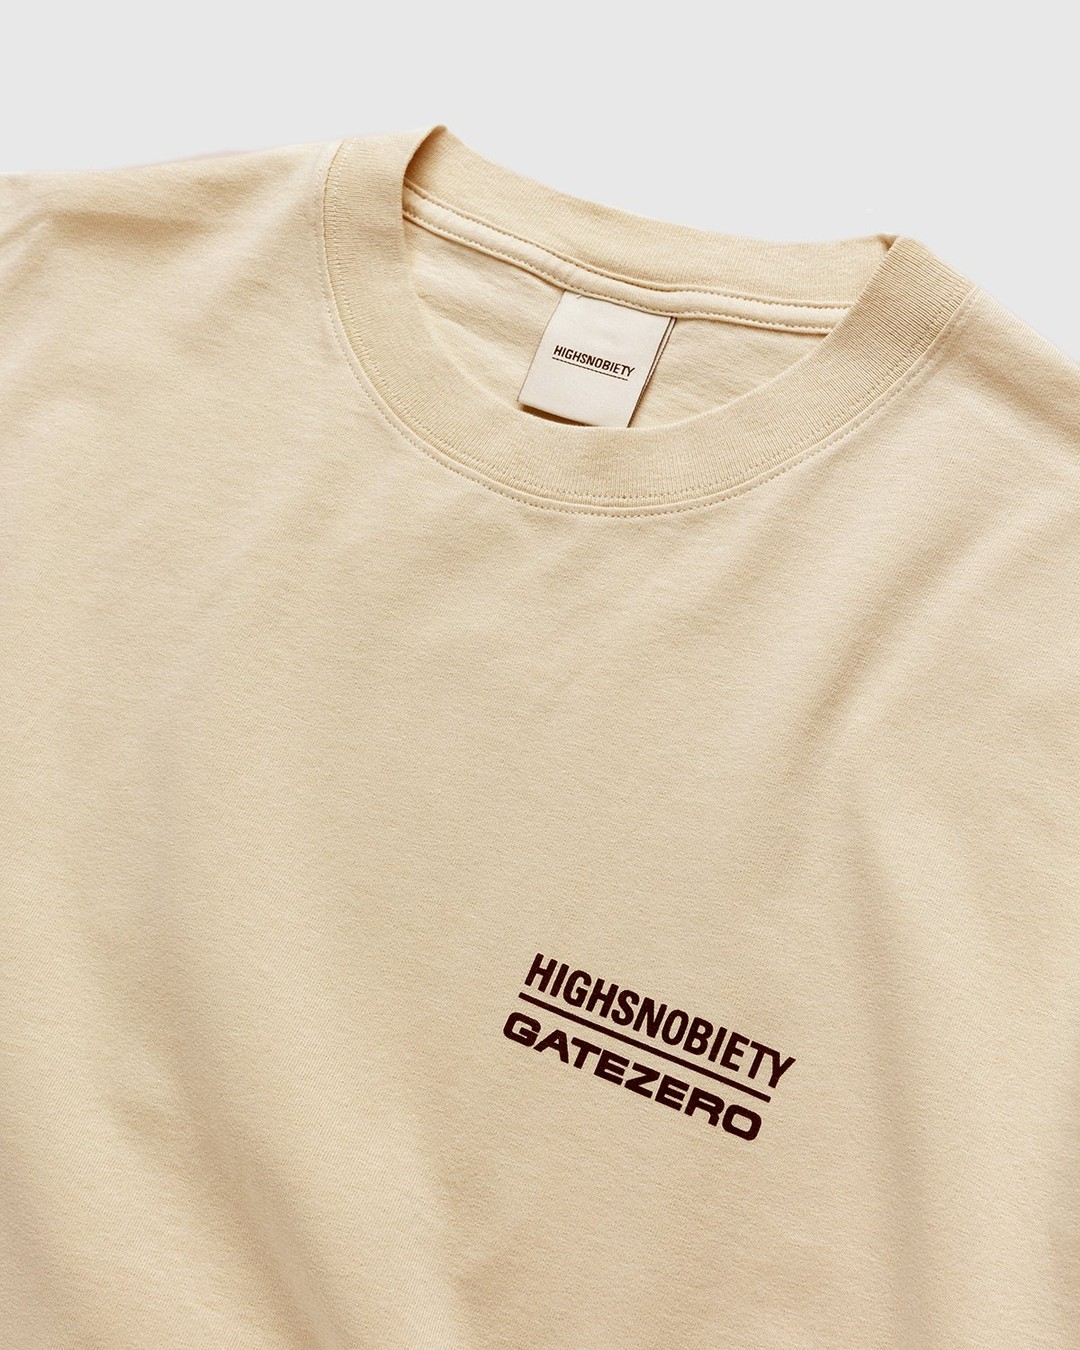 Highsnobiety – GATEZERO City Series 1 T-Shirt Eggshell - T-Shirts - White - Image 4